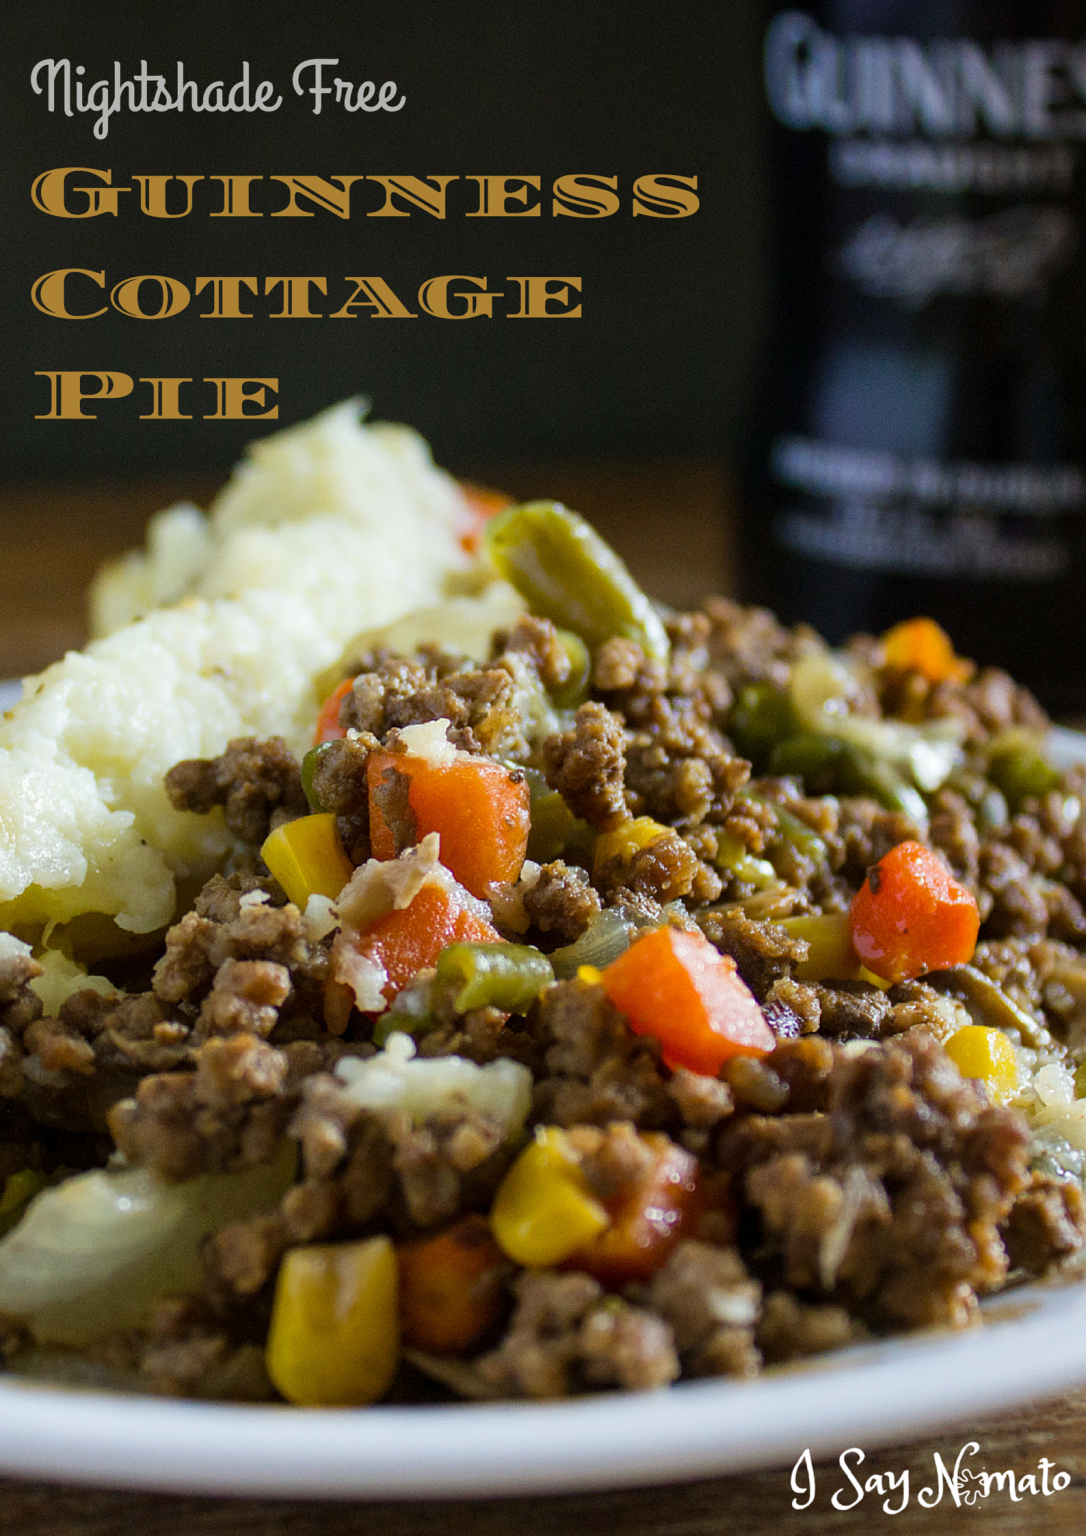 Guinness Cottage Pie - I Say Nomato Nightshade Free Food Blog